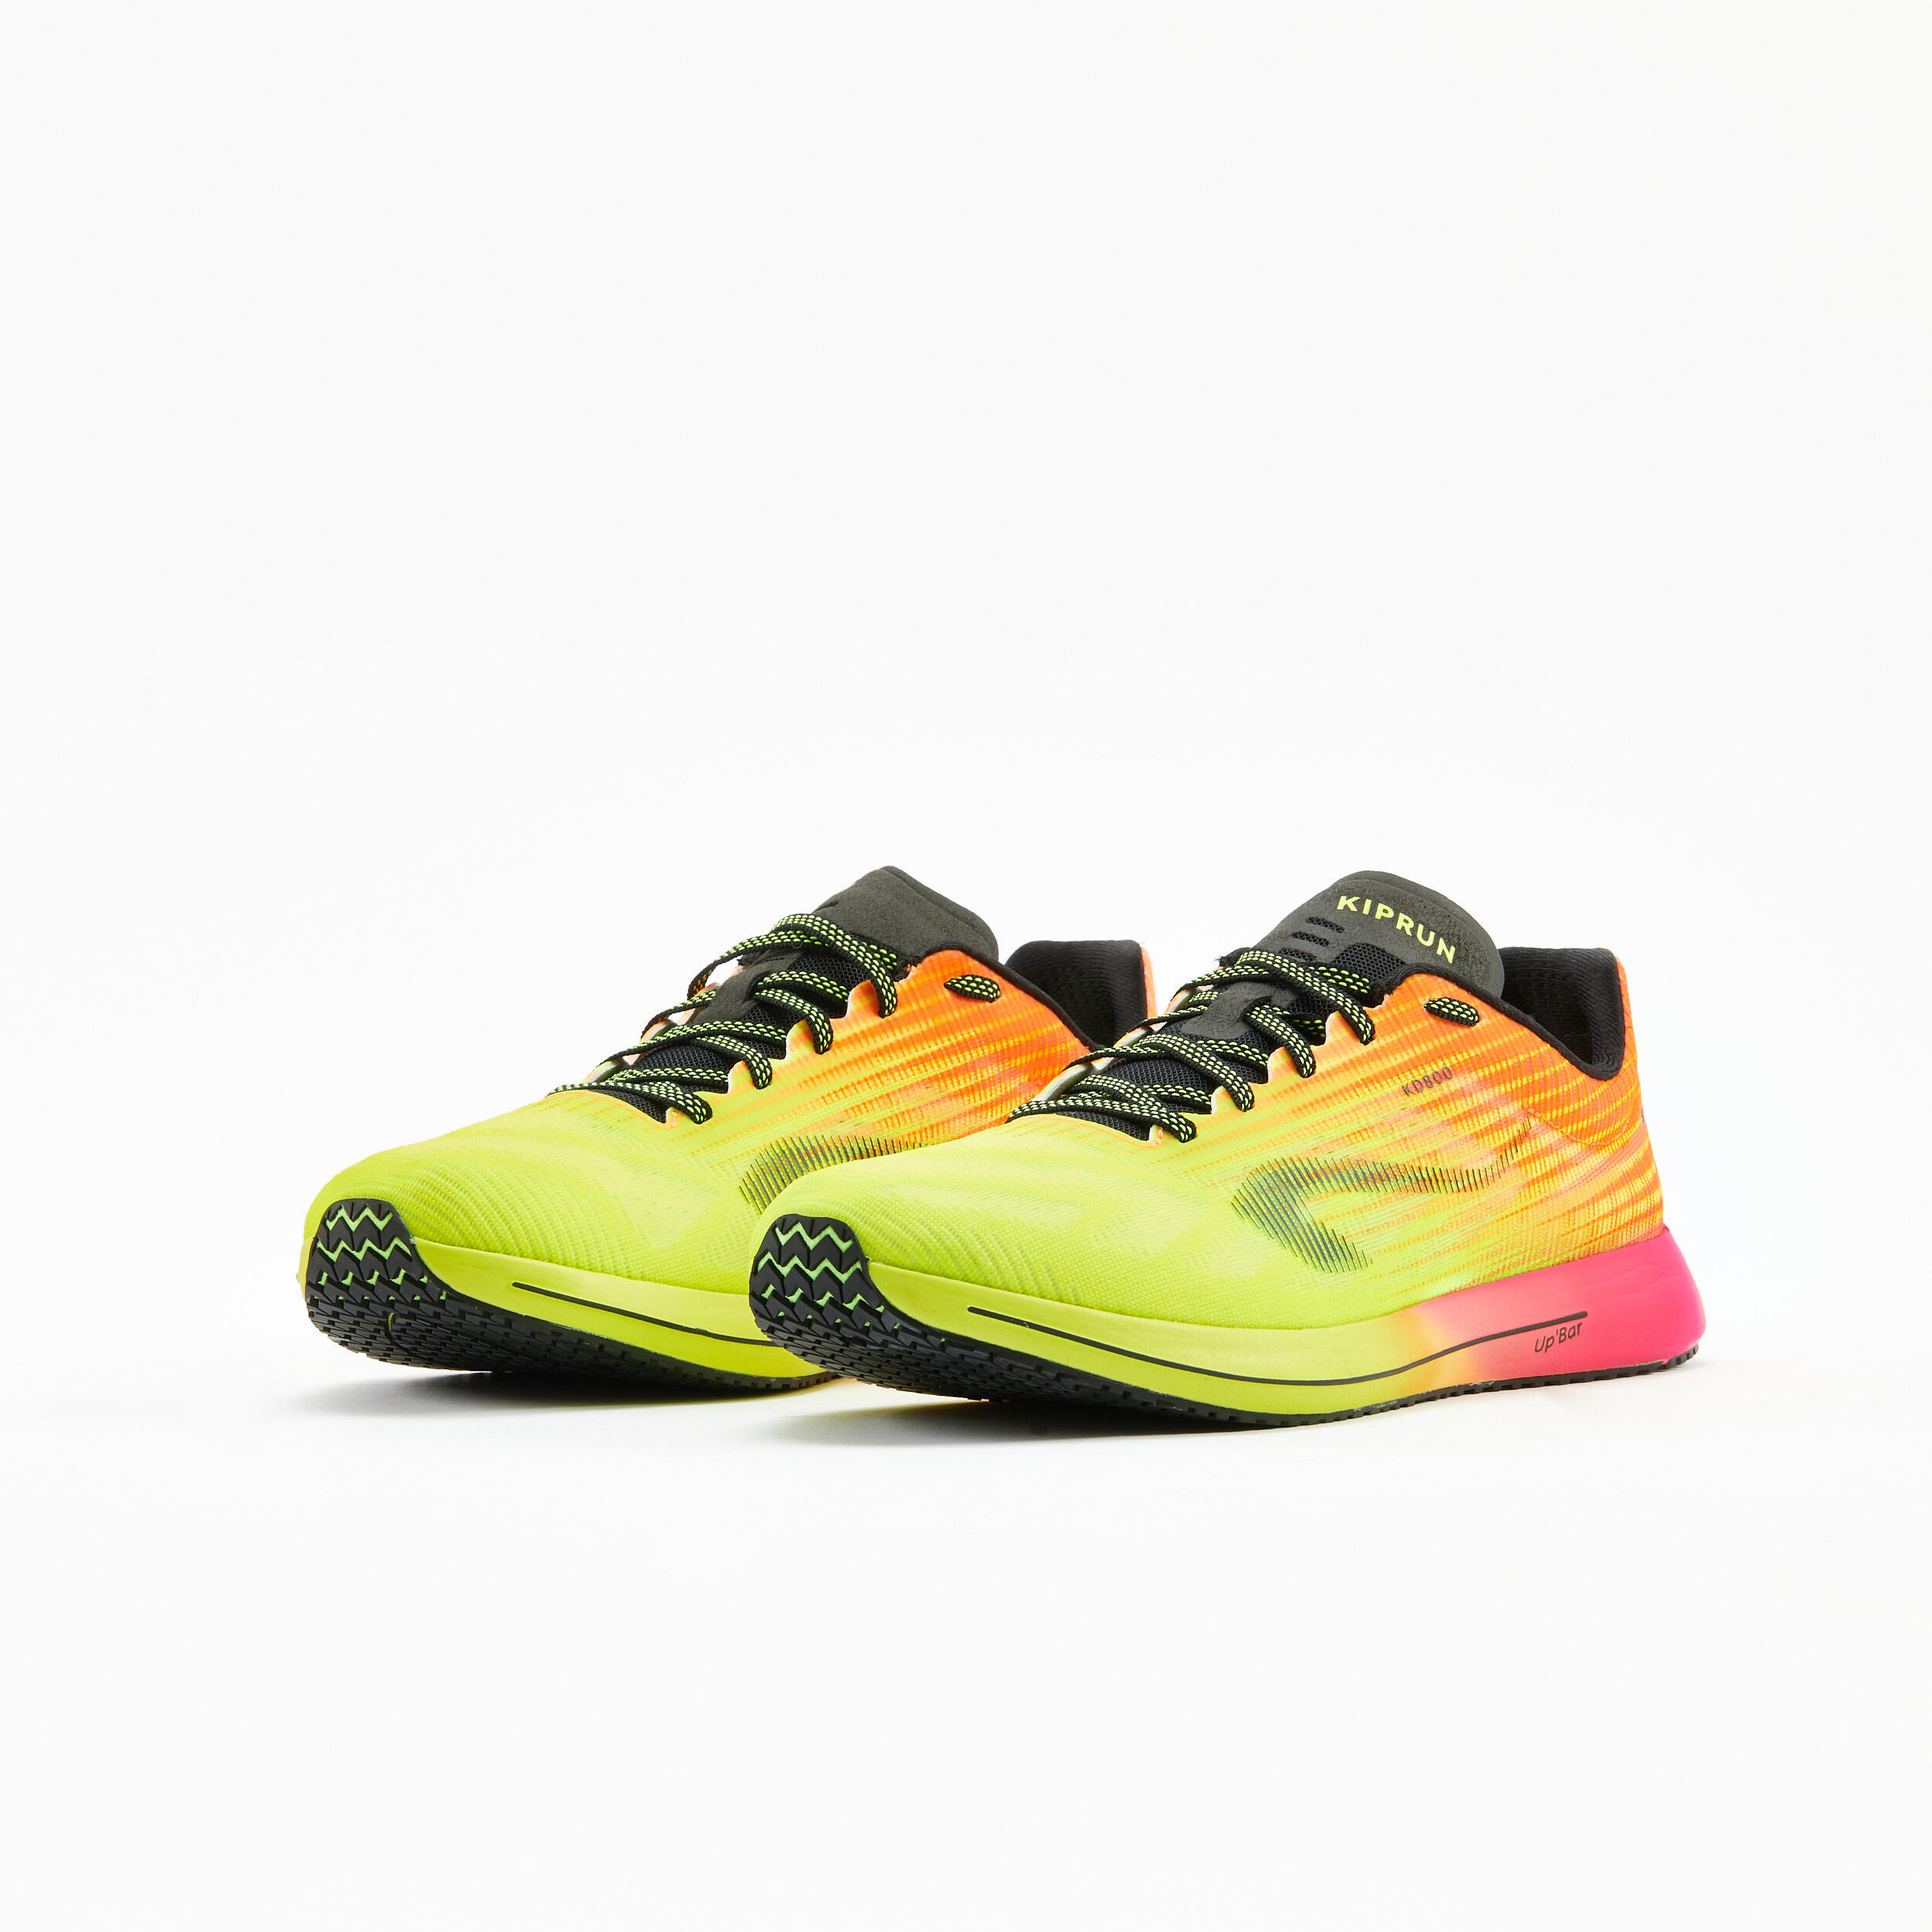 Kiprun KD800 Men's Running Shoes - yellow pink 2/8